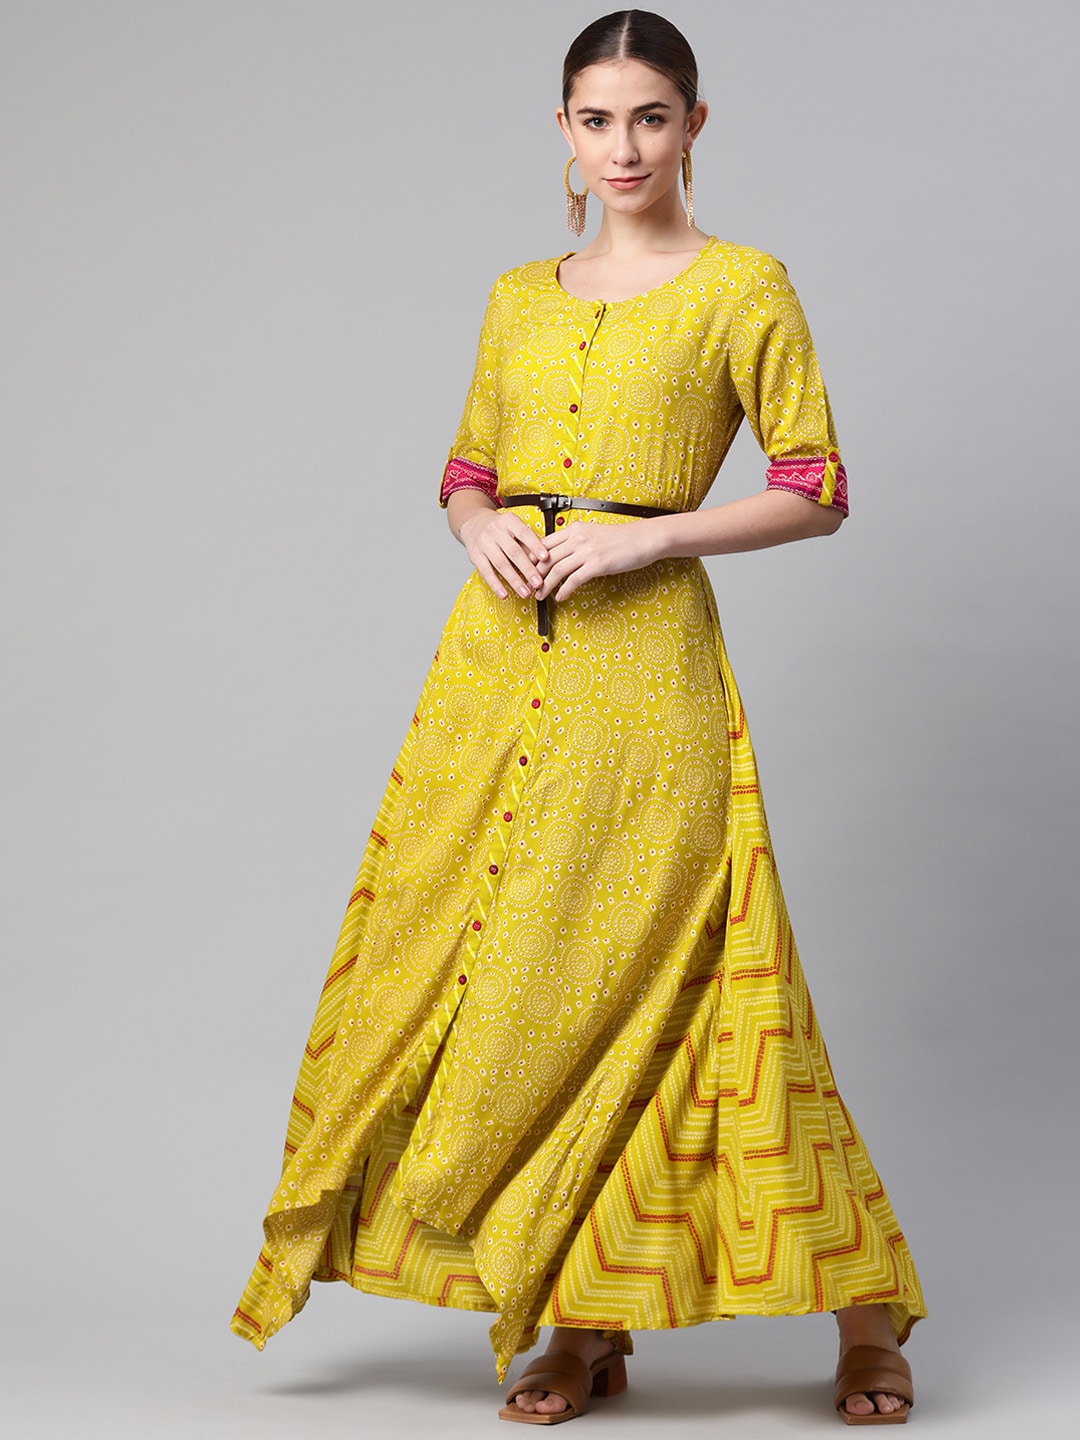 Rangriti Women Mustard Yellow & White Ethnic Maxi Dress with a Belt Price in India